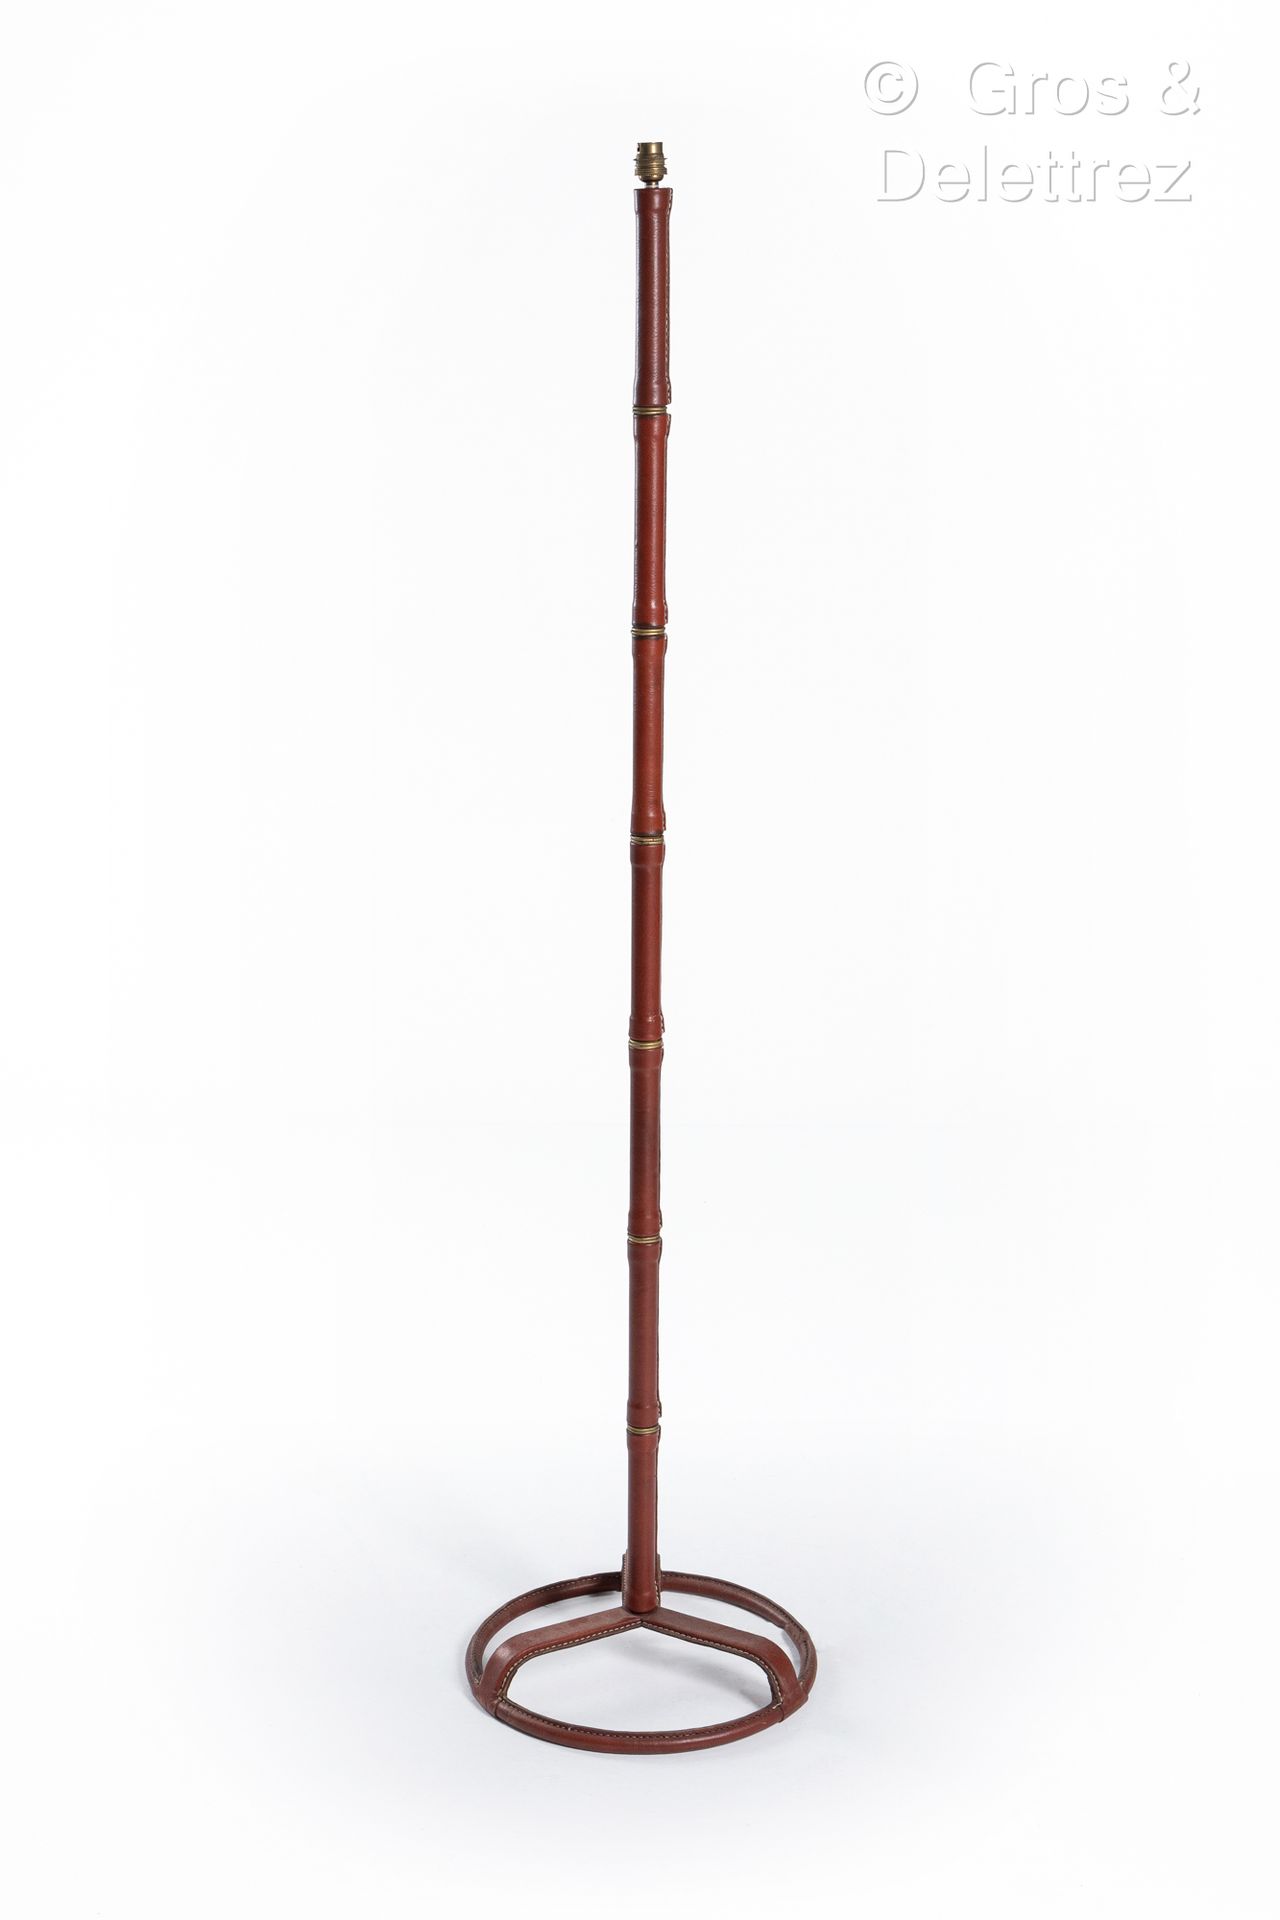 Null 雅克-阿德内(1900-1984)
落地灯，管状轴完全由红色皮革护套，马鞍缝制，点缀有镀金铜环。
大约在1950-1960年。
高度：147.5厘米